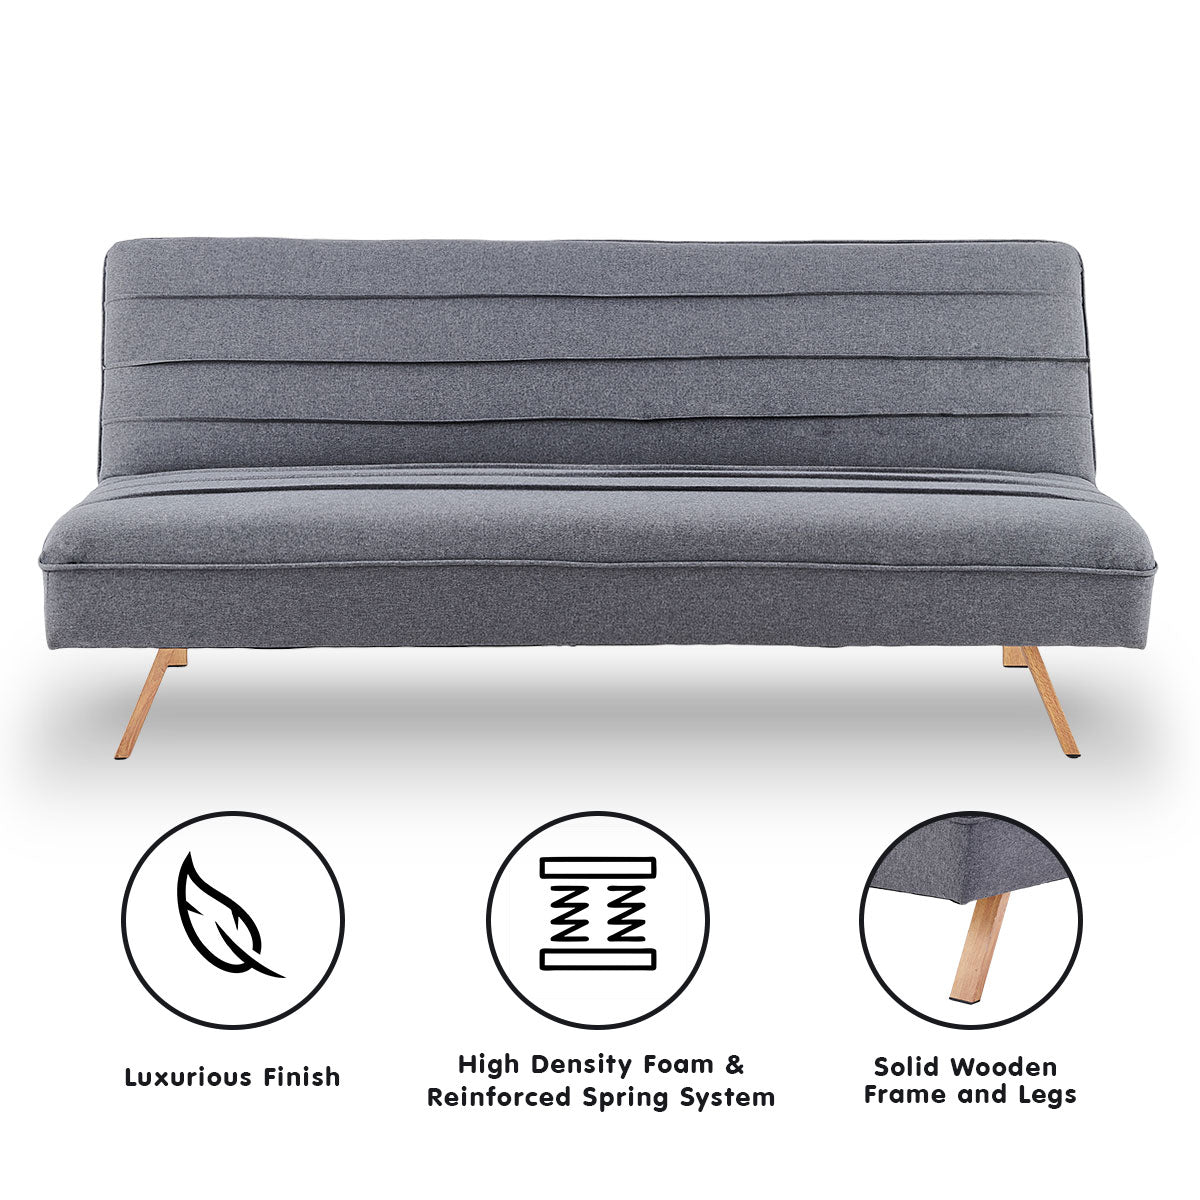 Sarantino 3 Seater Modular Linen Fabric Sofa Bed Couch - Dark Grey - 0